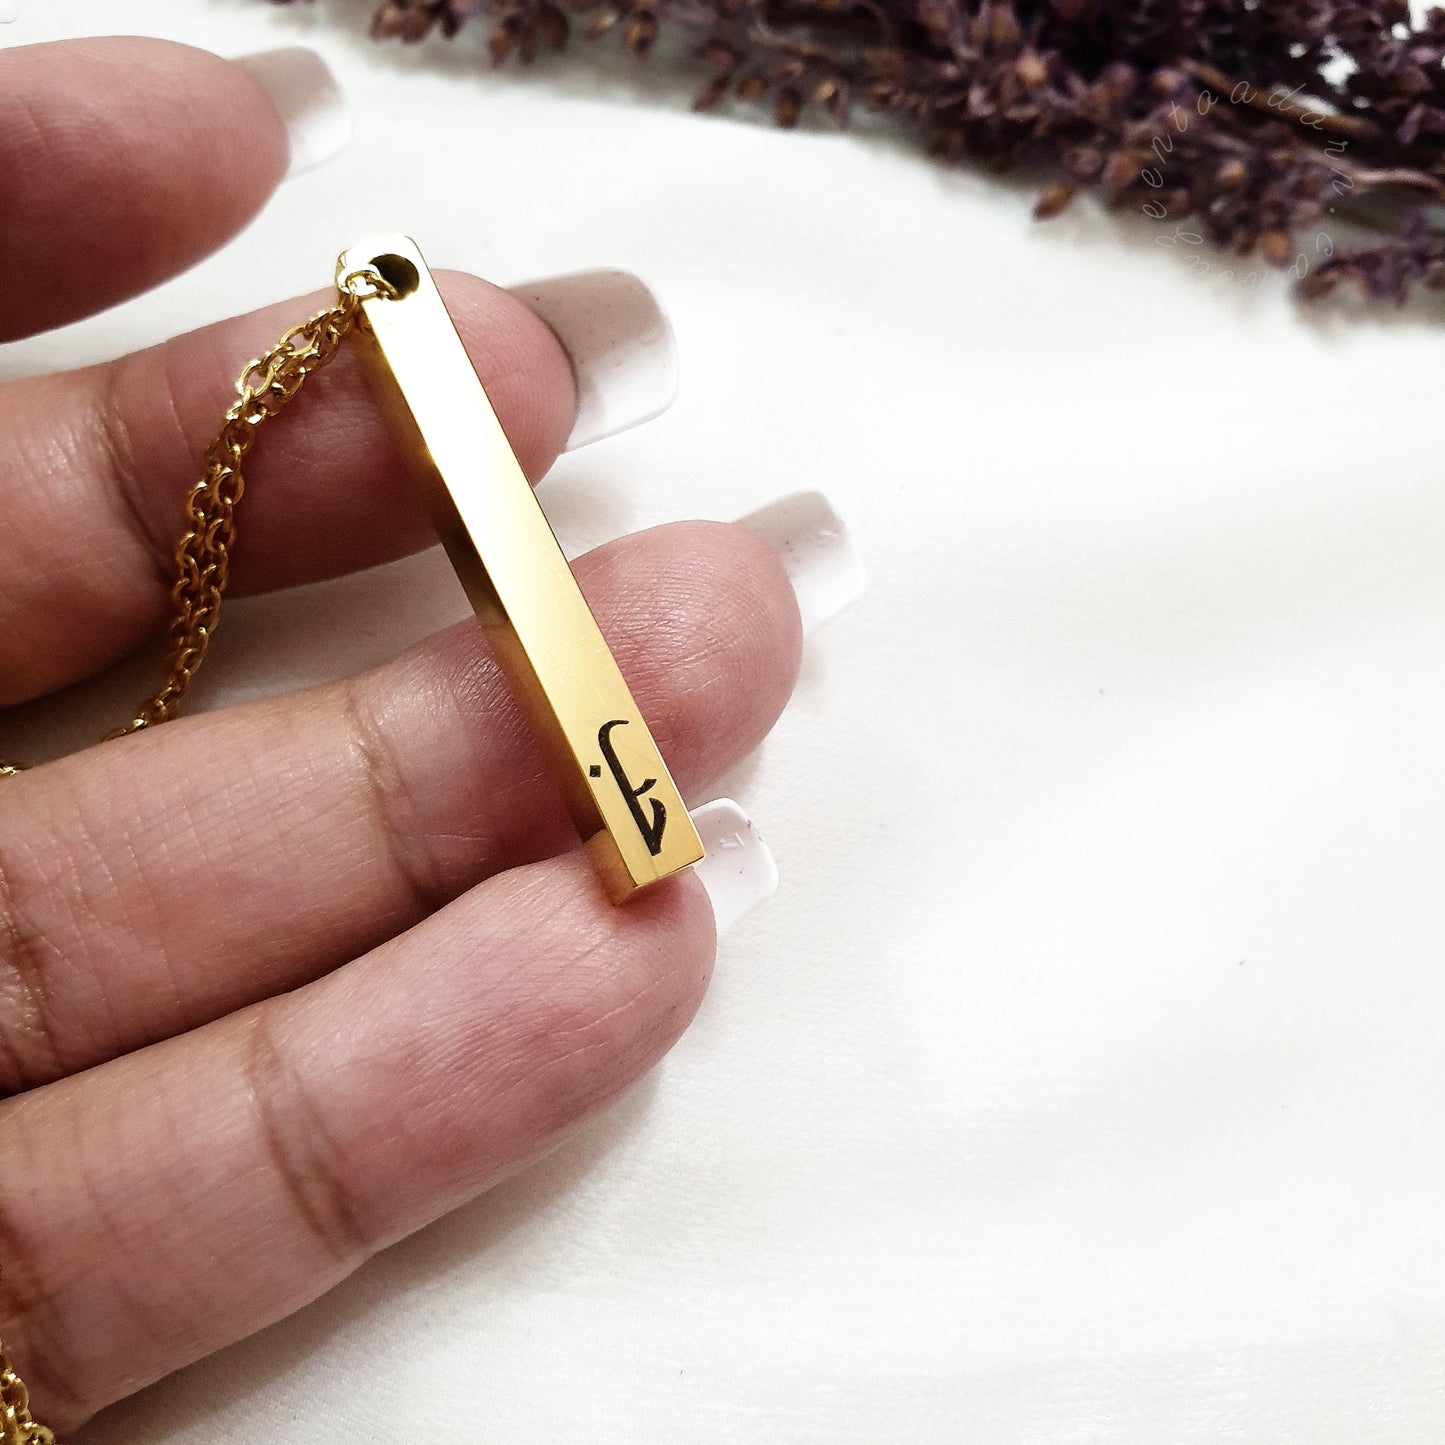 Inspiring Rectangle Bar Deen Pendant Necklace -  (Maghfirah) مغفرة, (Love) حب, (Peace) سلام -  Gold 18K Plated - Islamic Gift